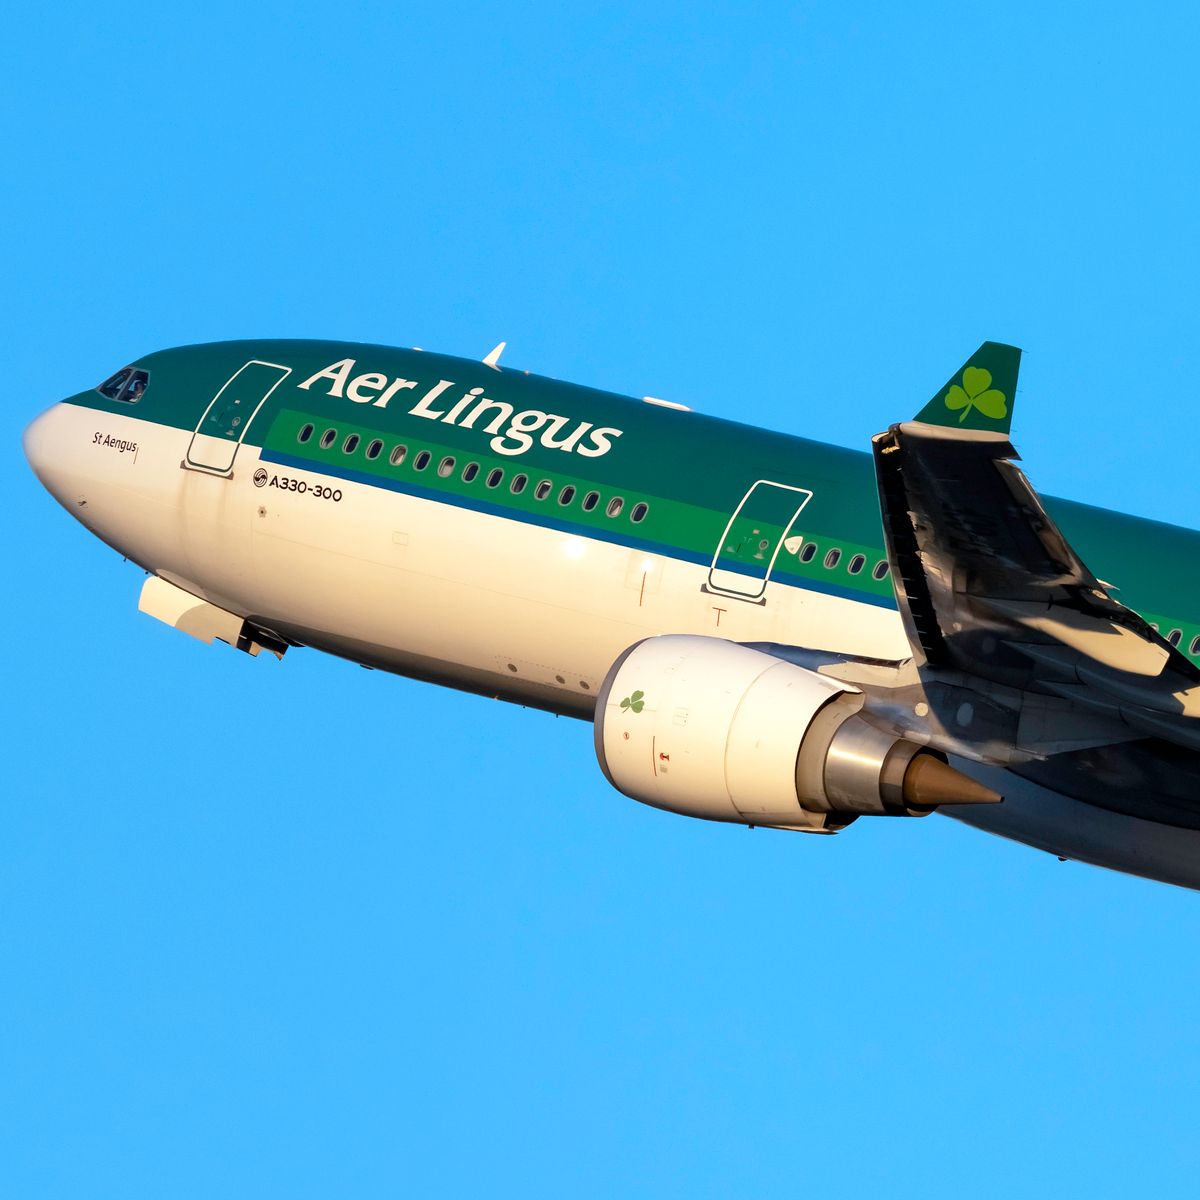 Aer Lingus Airbus A330-302